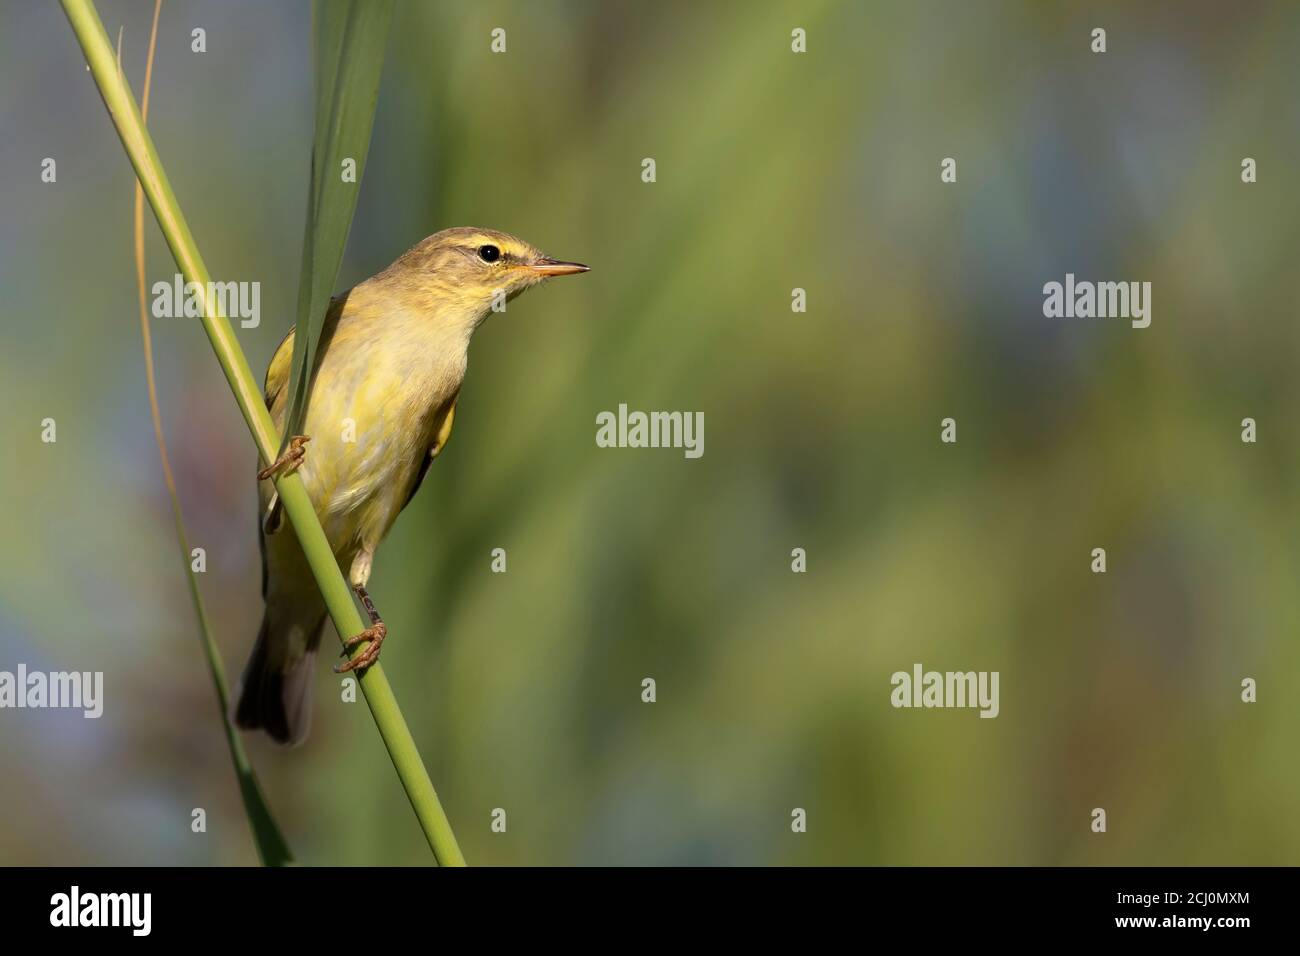 Cute yellow bird. Green nature background. Bird: Willow Warbler. Stock Photo